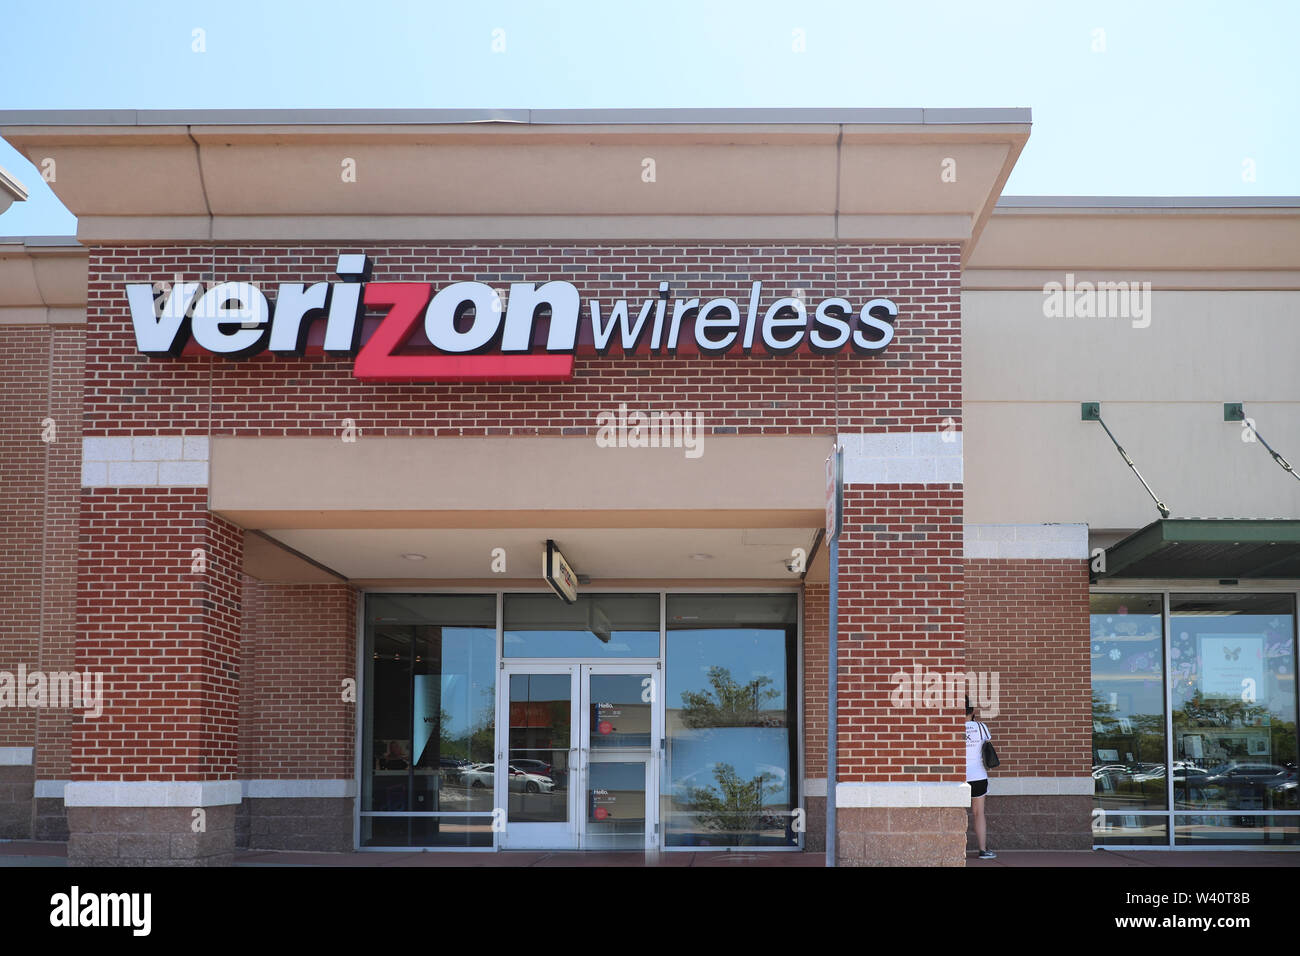 Princeton, NJ, USA. June 23, 2019: Verizon Wireless Retail Location. Verizon delivers wireless, high-capacity fiber optics and 5G communications VI - Stock Photo